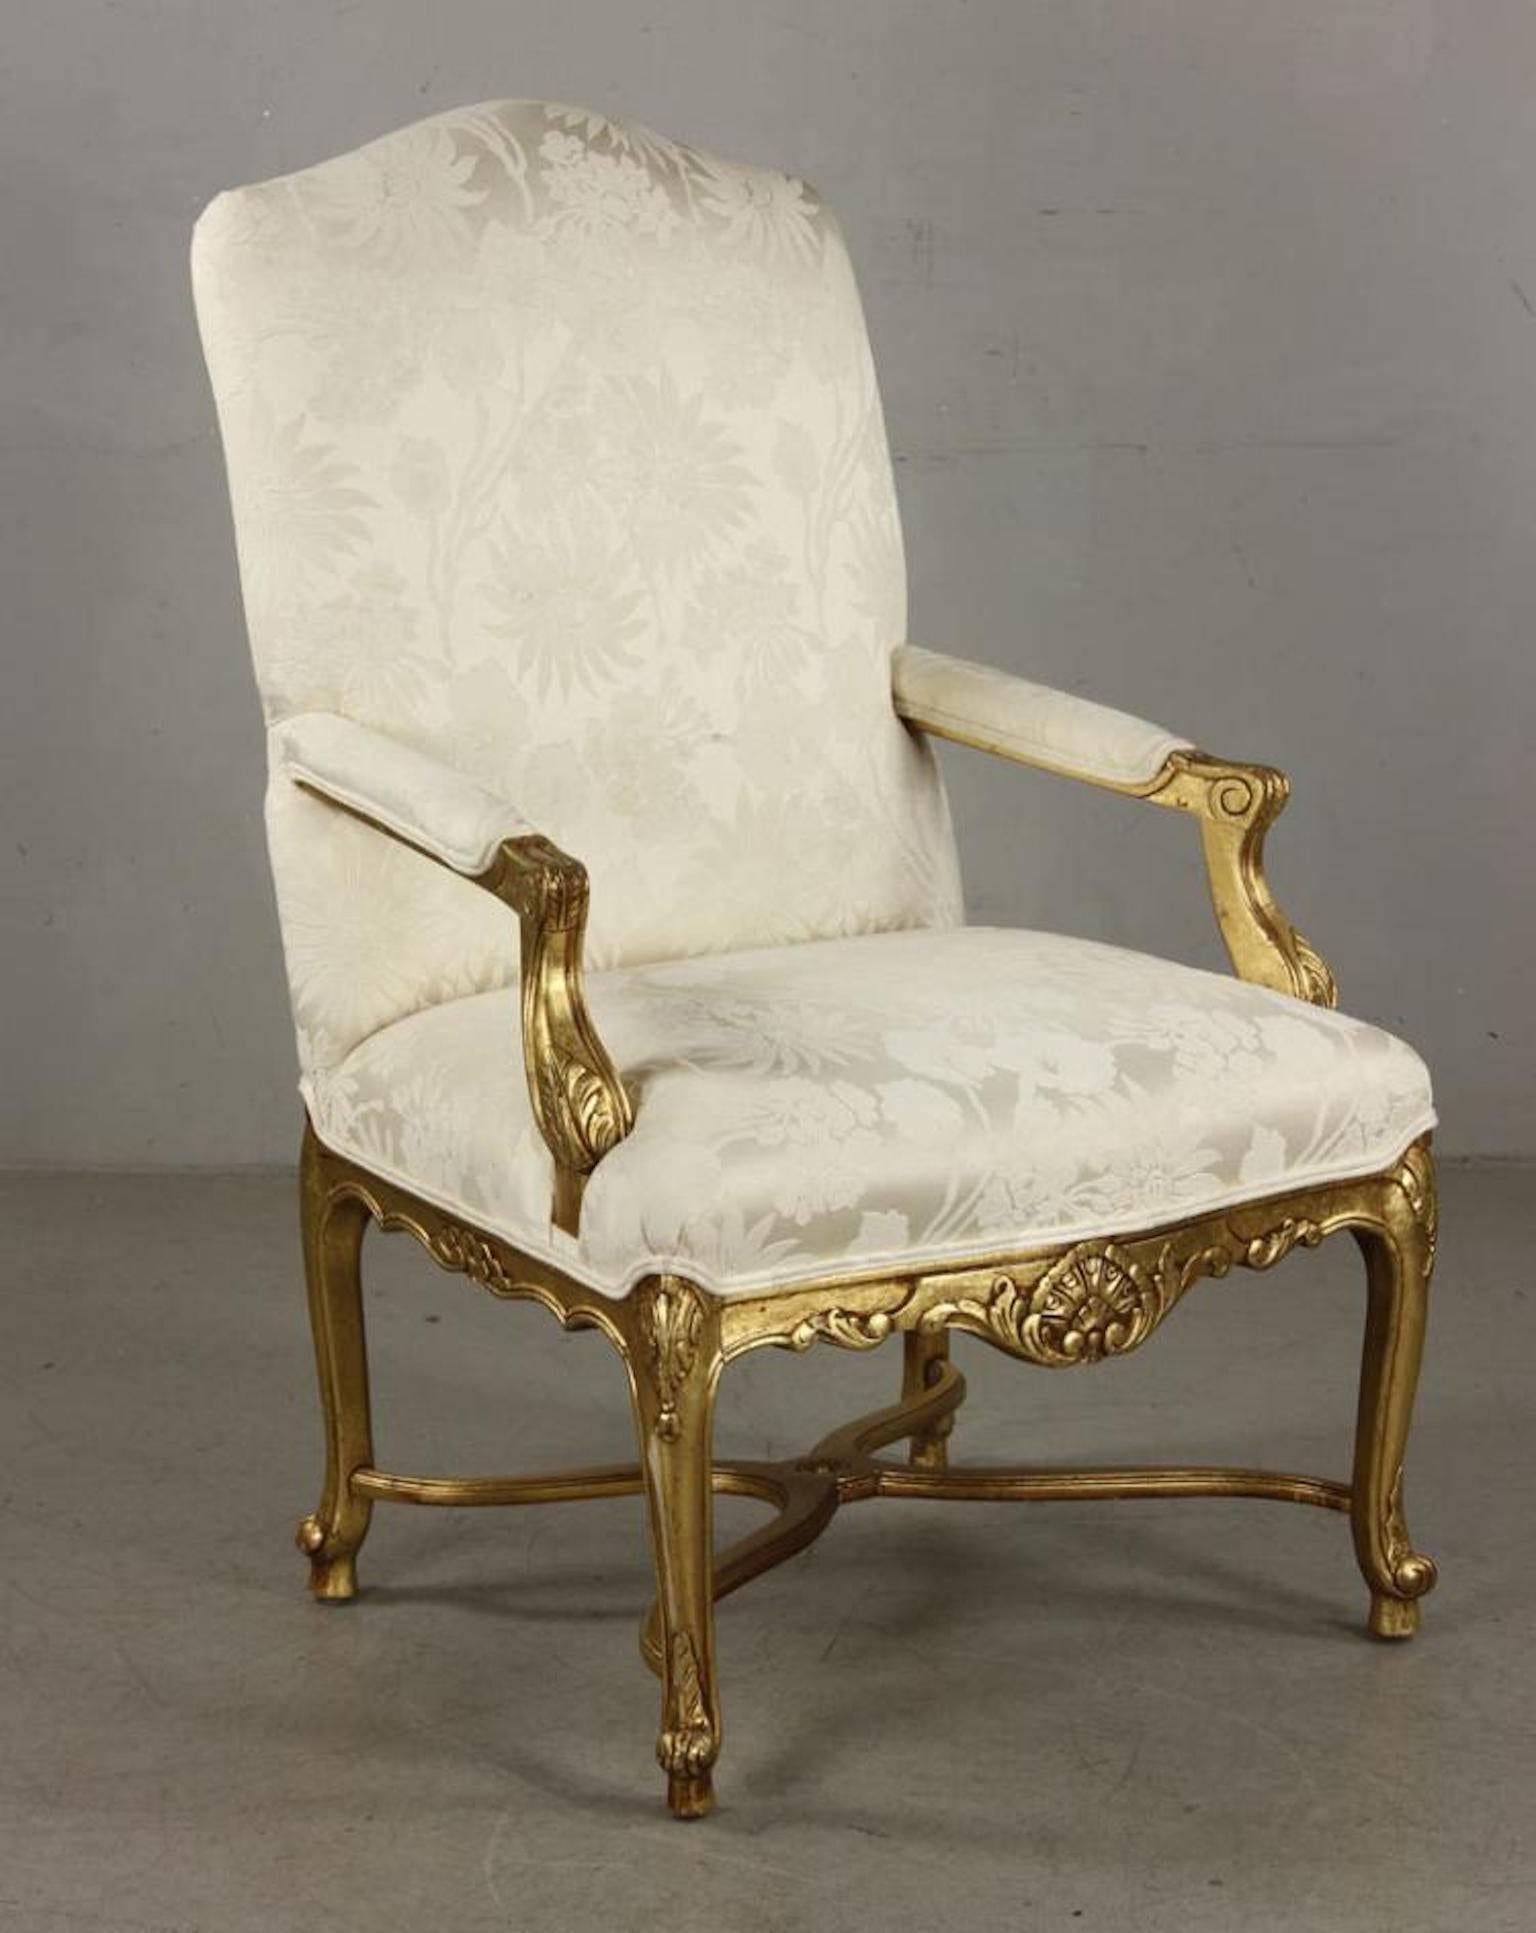 French Louis XVI armchair, giltwood, 19th century.
 